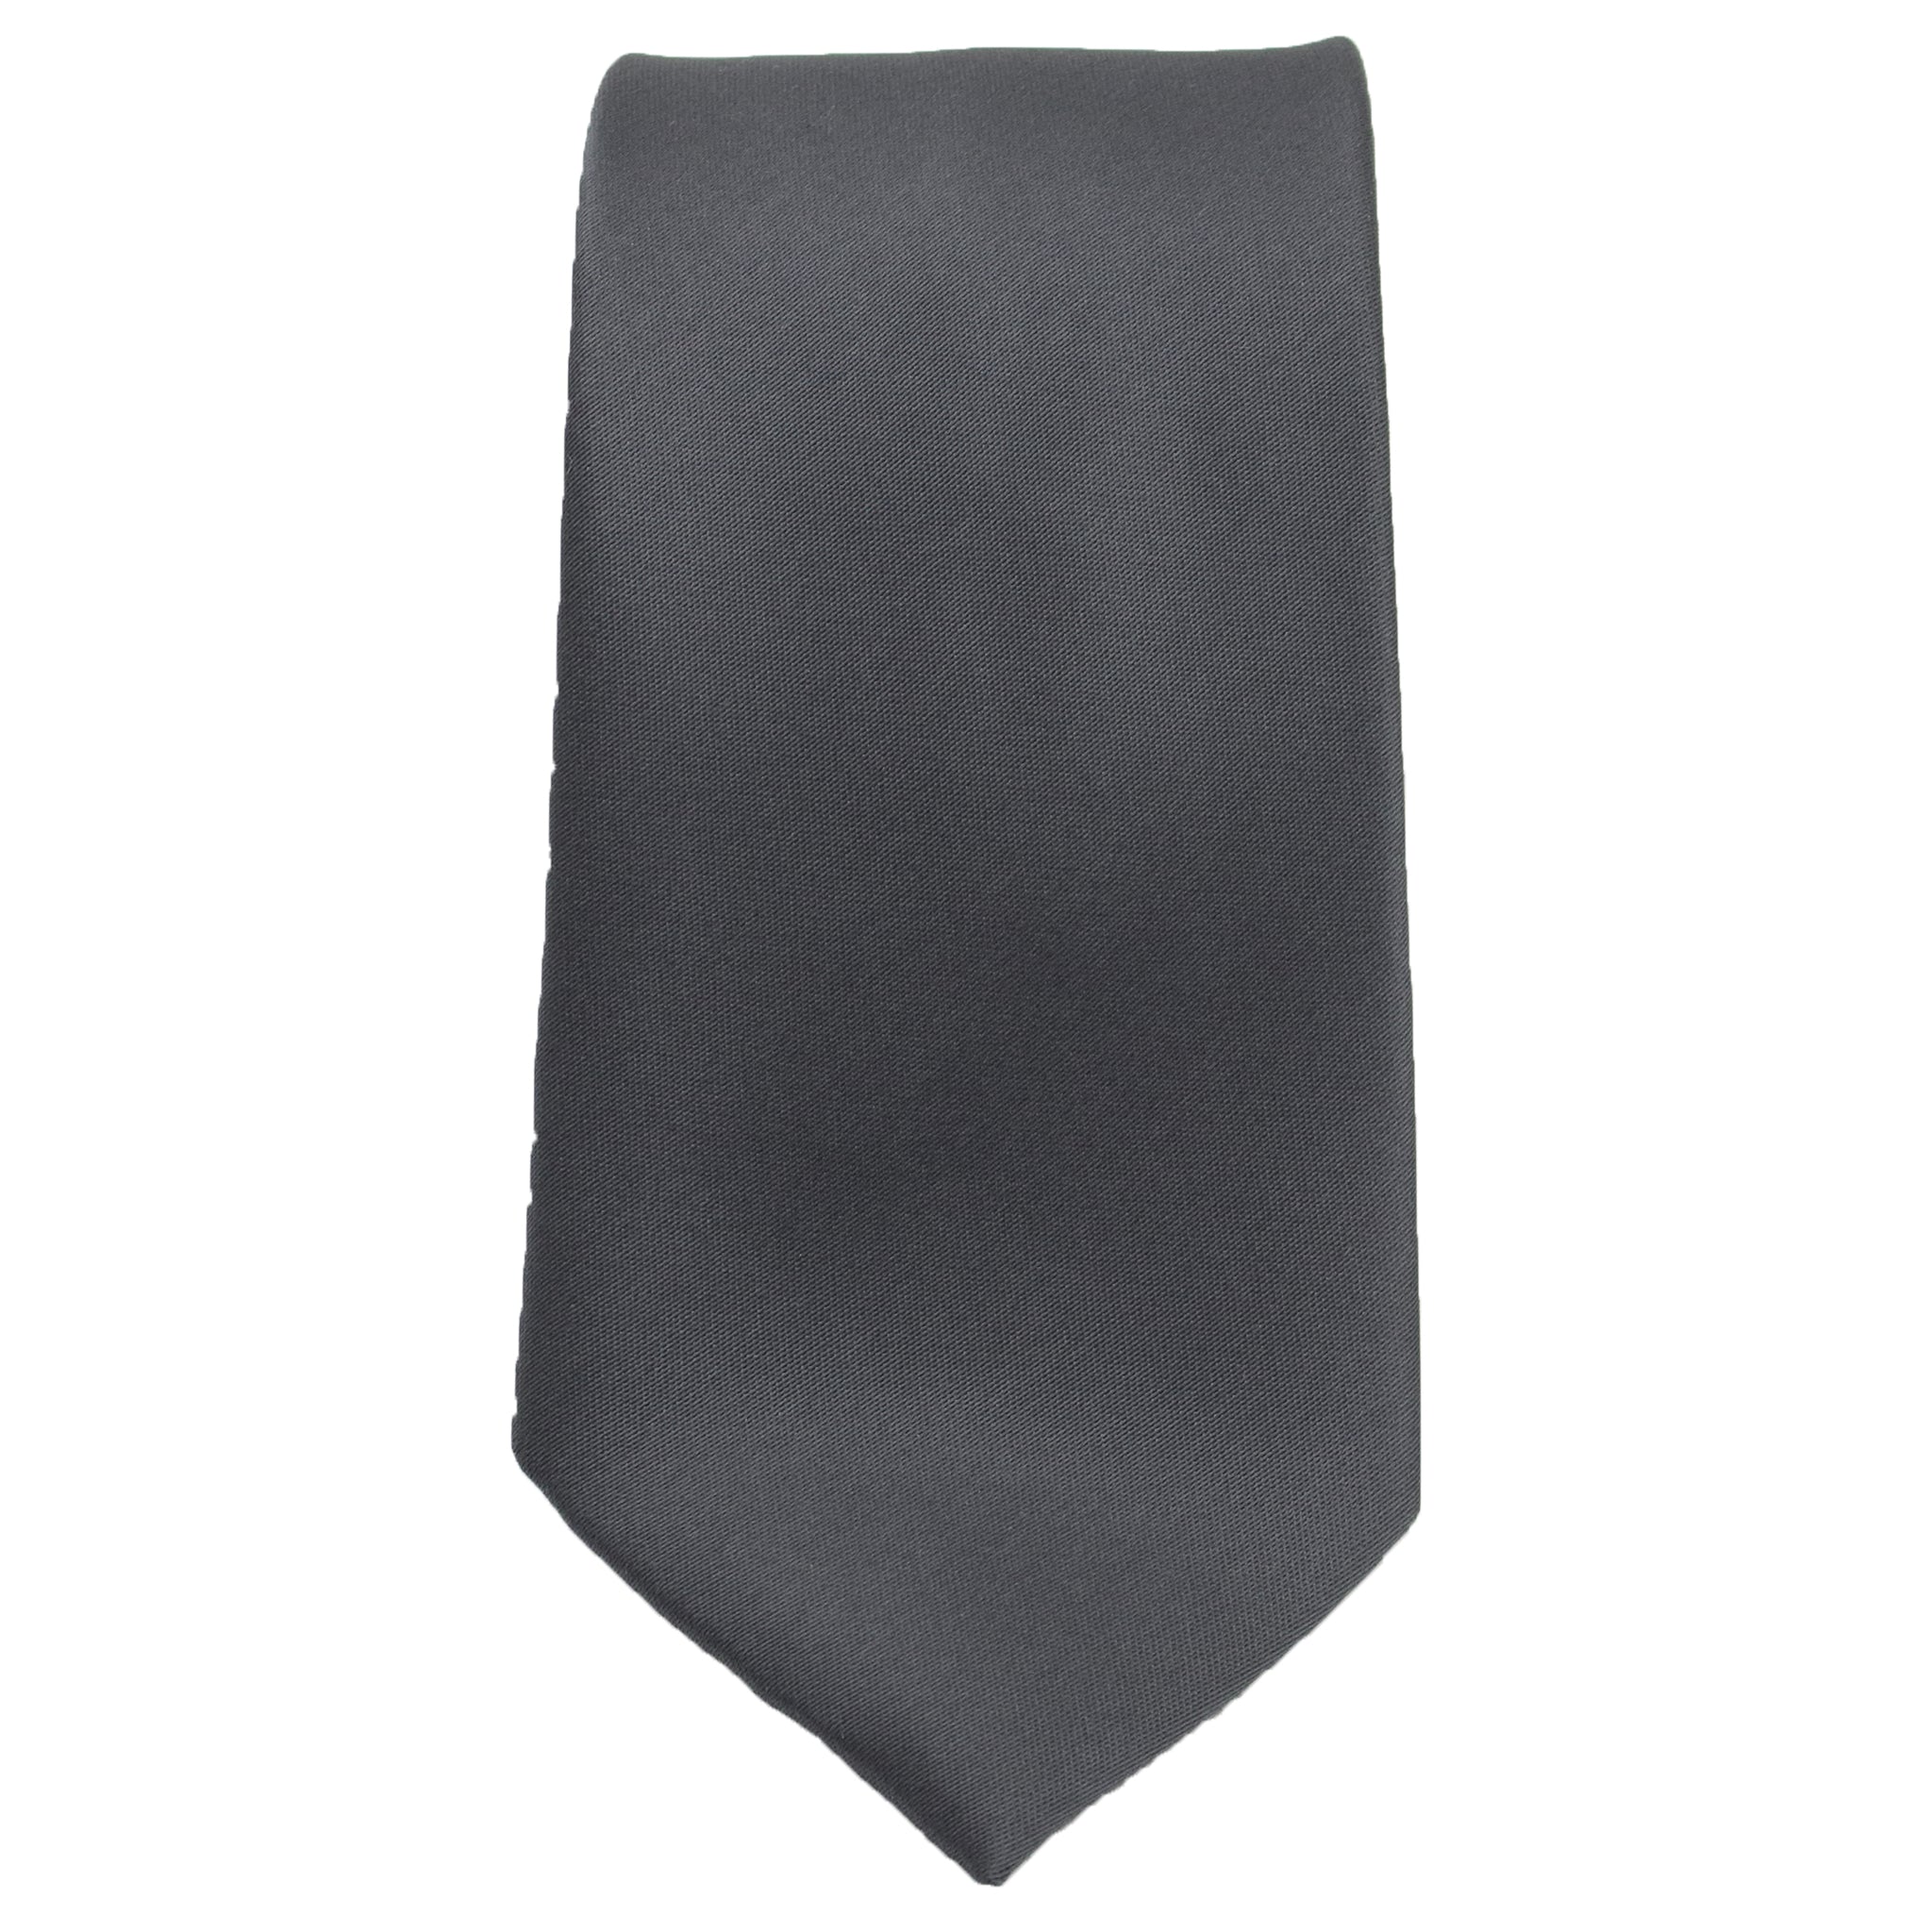 Charcoal Satin Tie